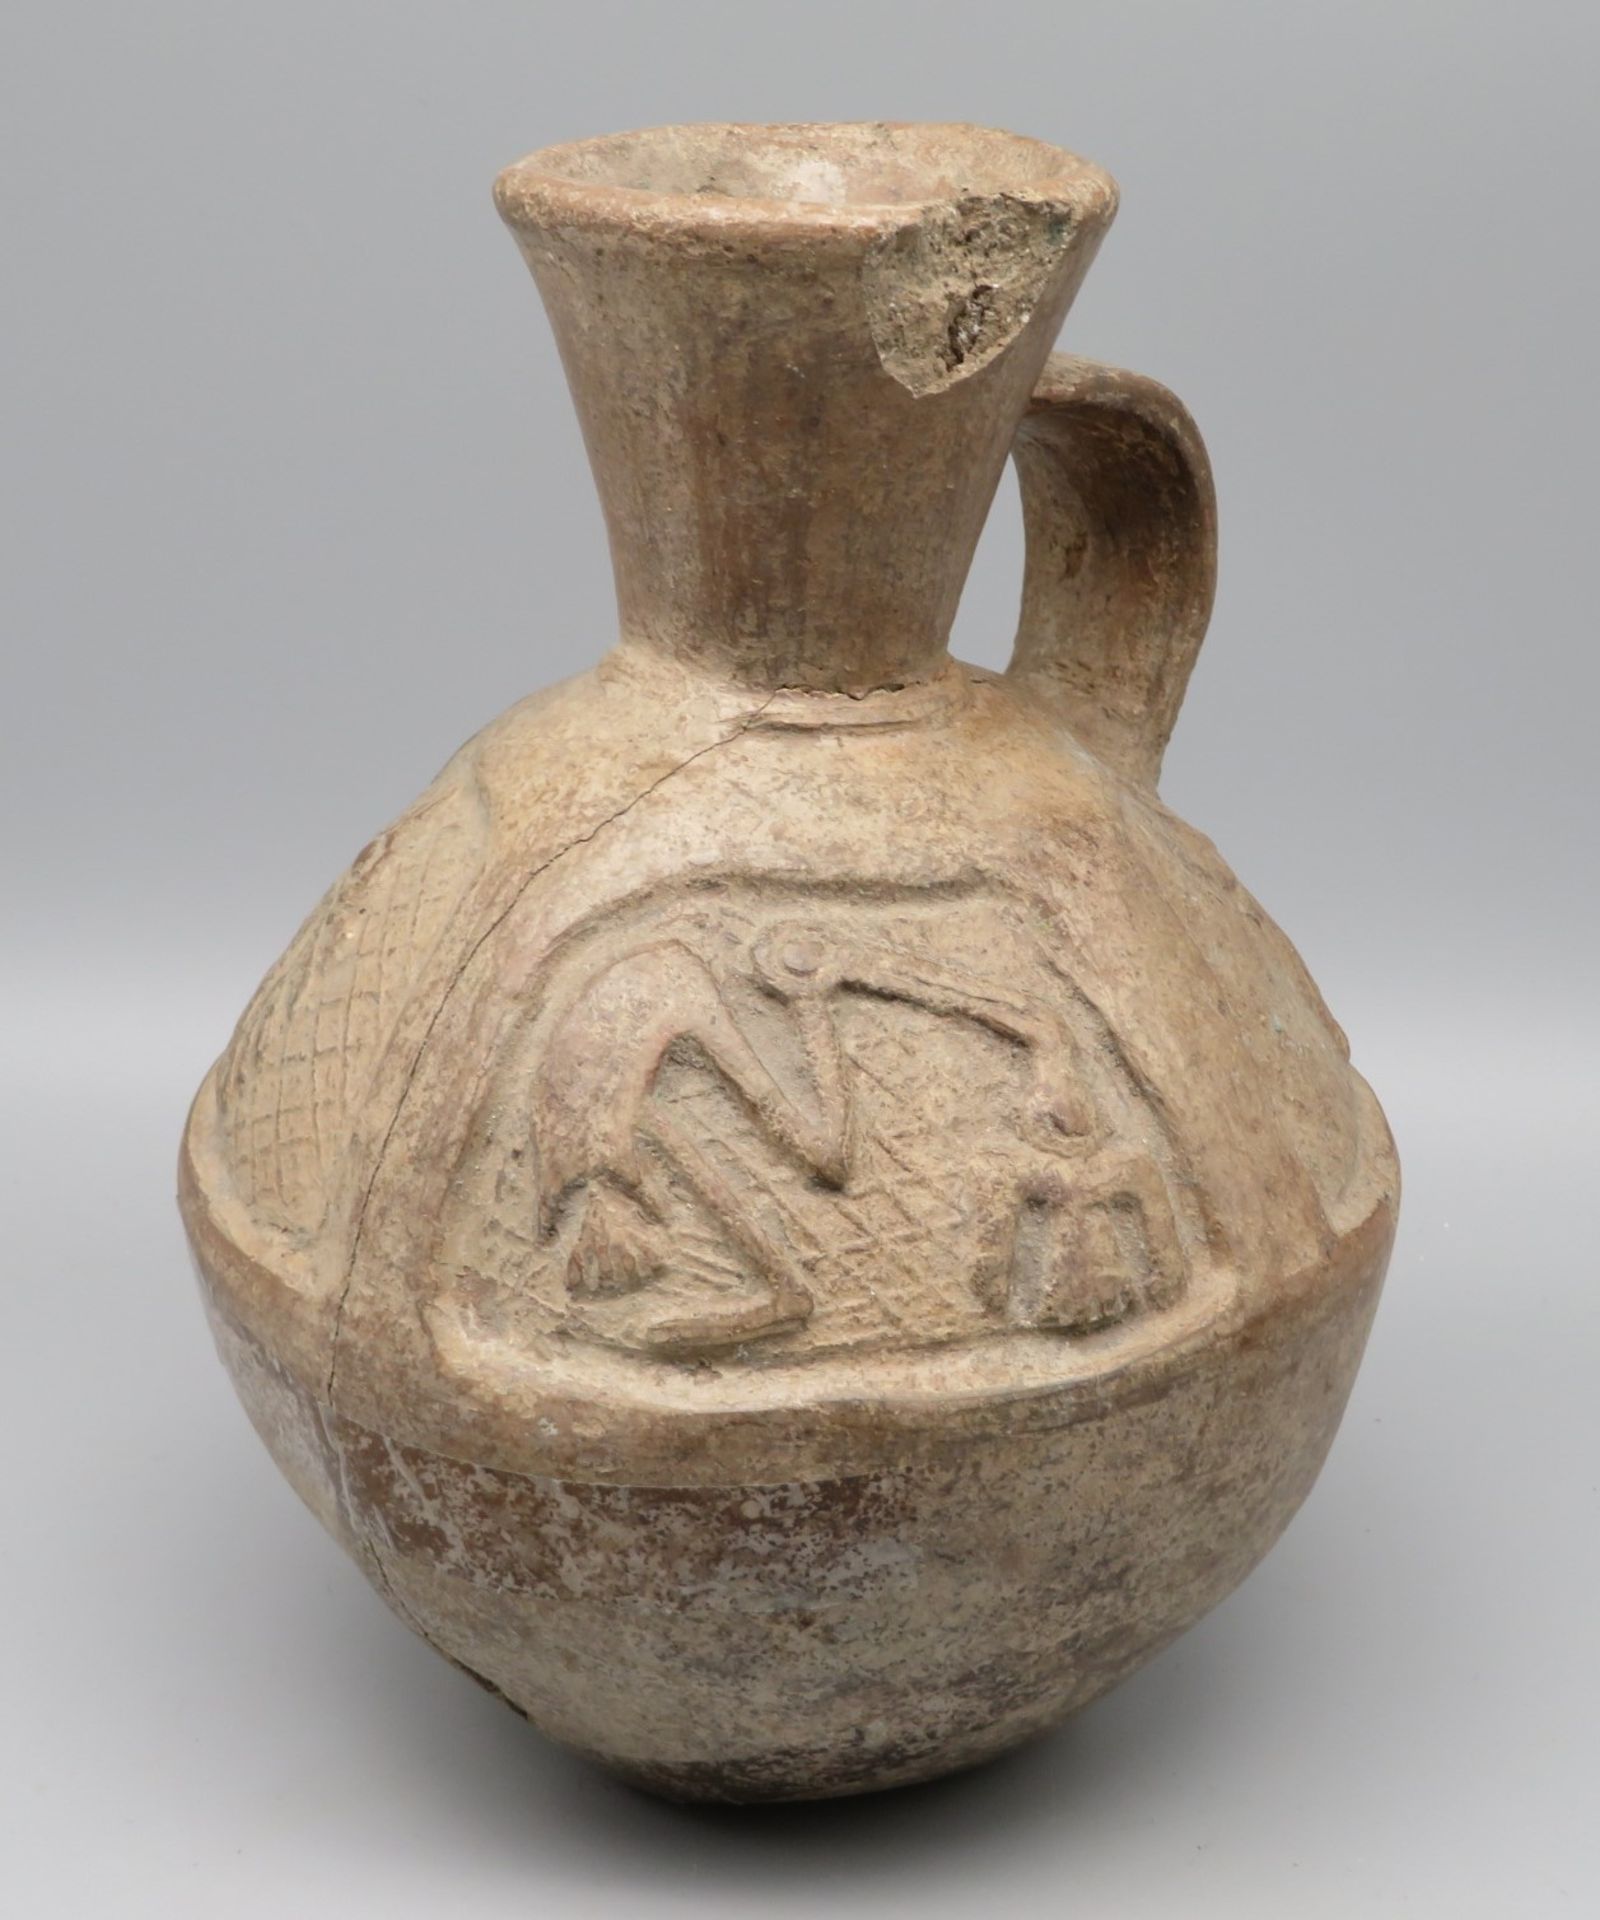 Antiker Henkelkrug, wohl Südamerika, wohl Chimú Kultur, Ton, Sprung in Wandung, h 22 cm, d 16 cm. - Image 2 of 3